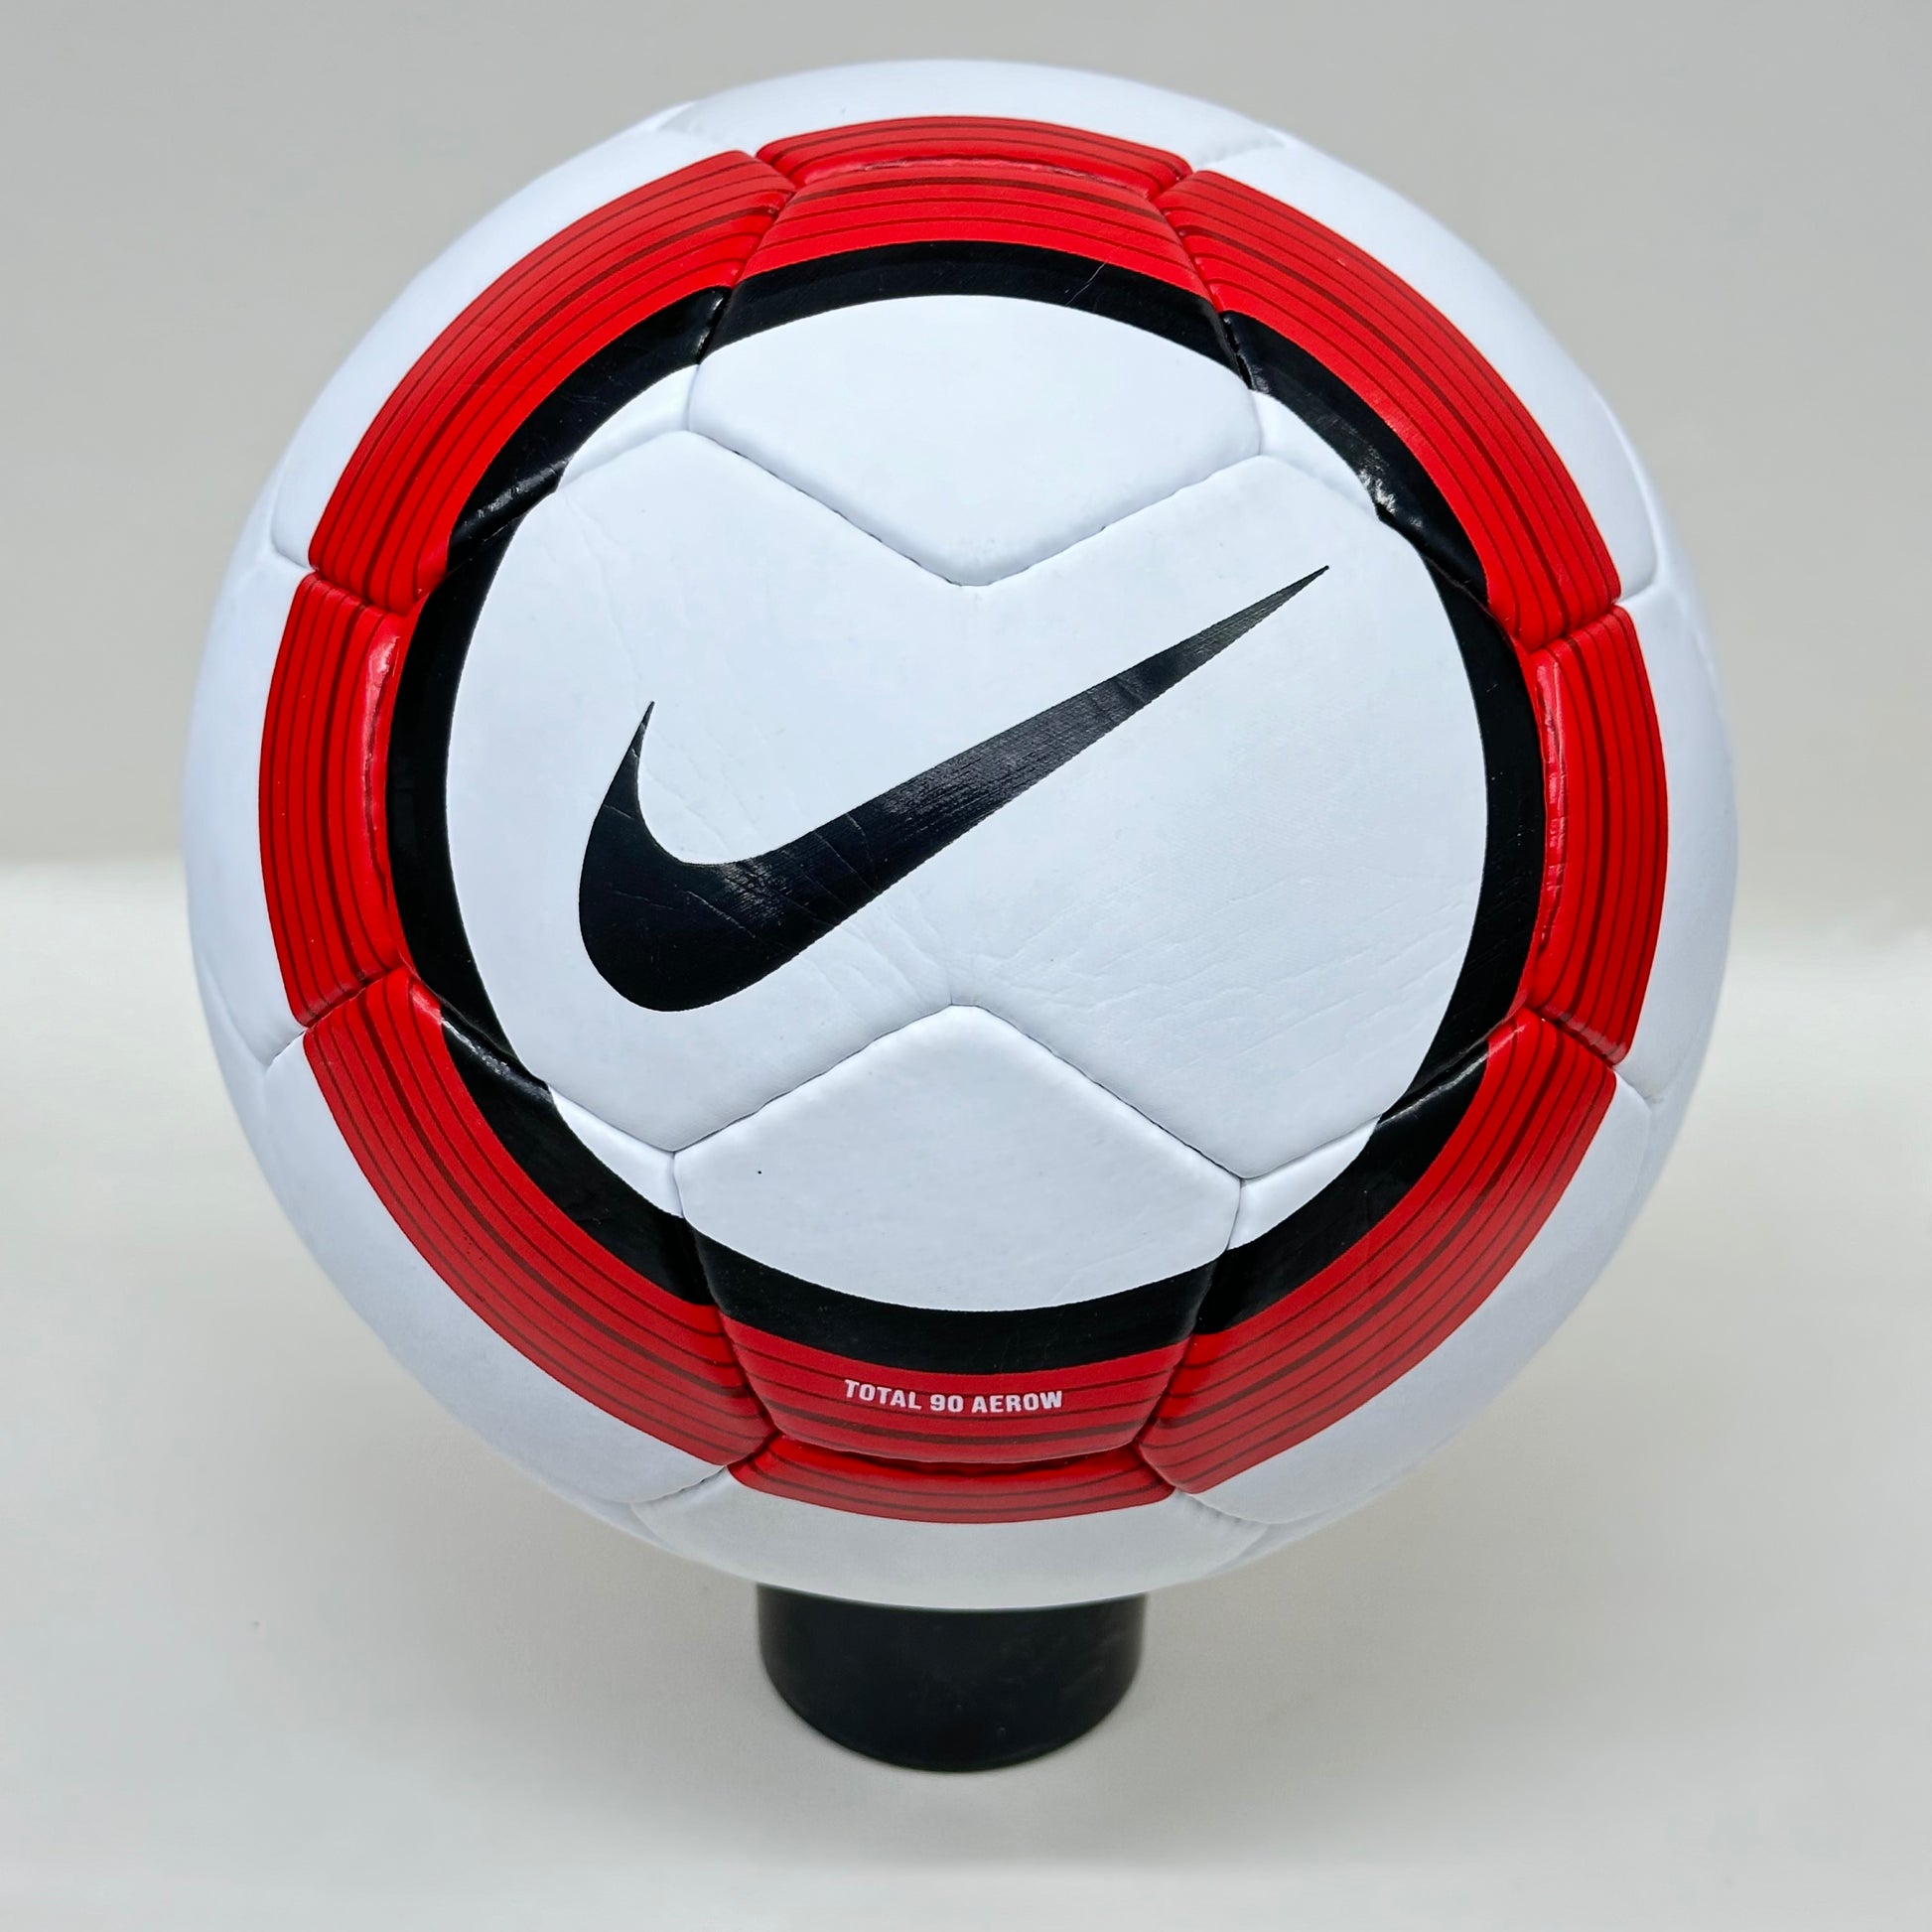 Nike Total 90 Aerow 1 | The FA Premier League l 2005 | Size 5 | Barclays 02